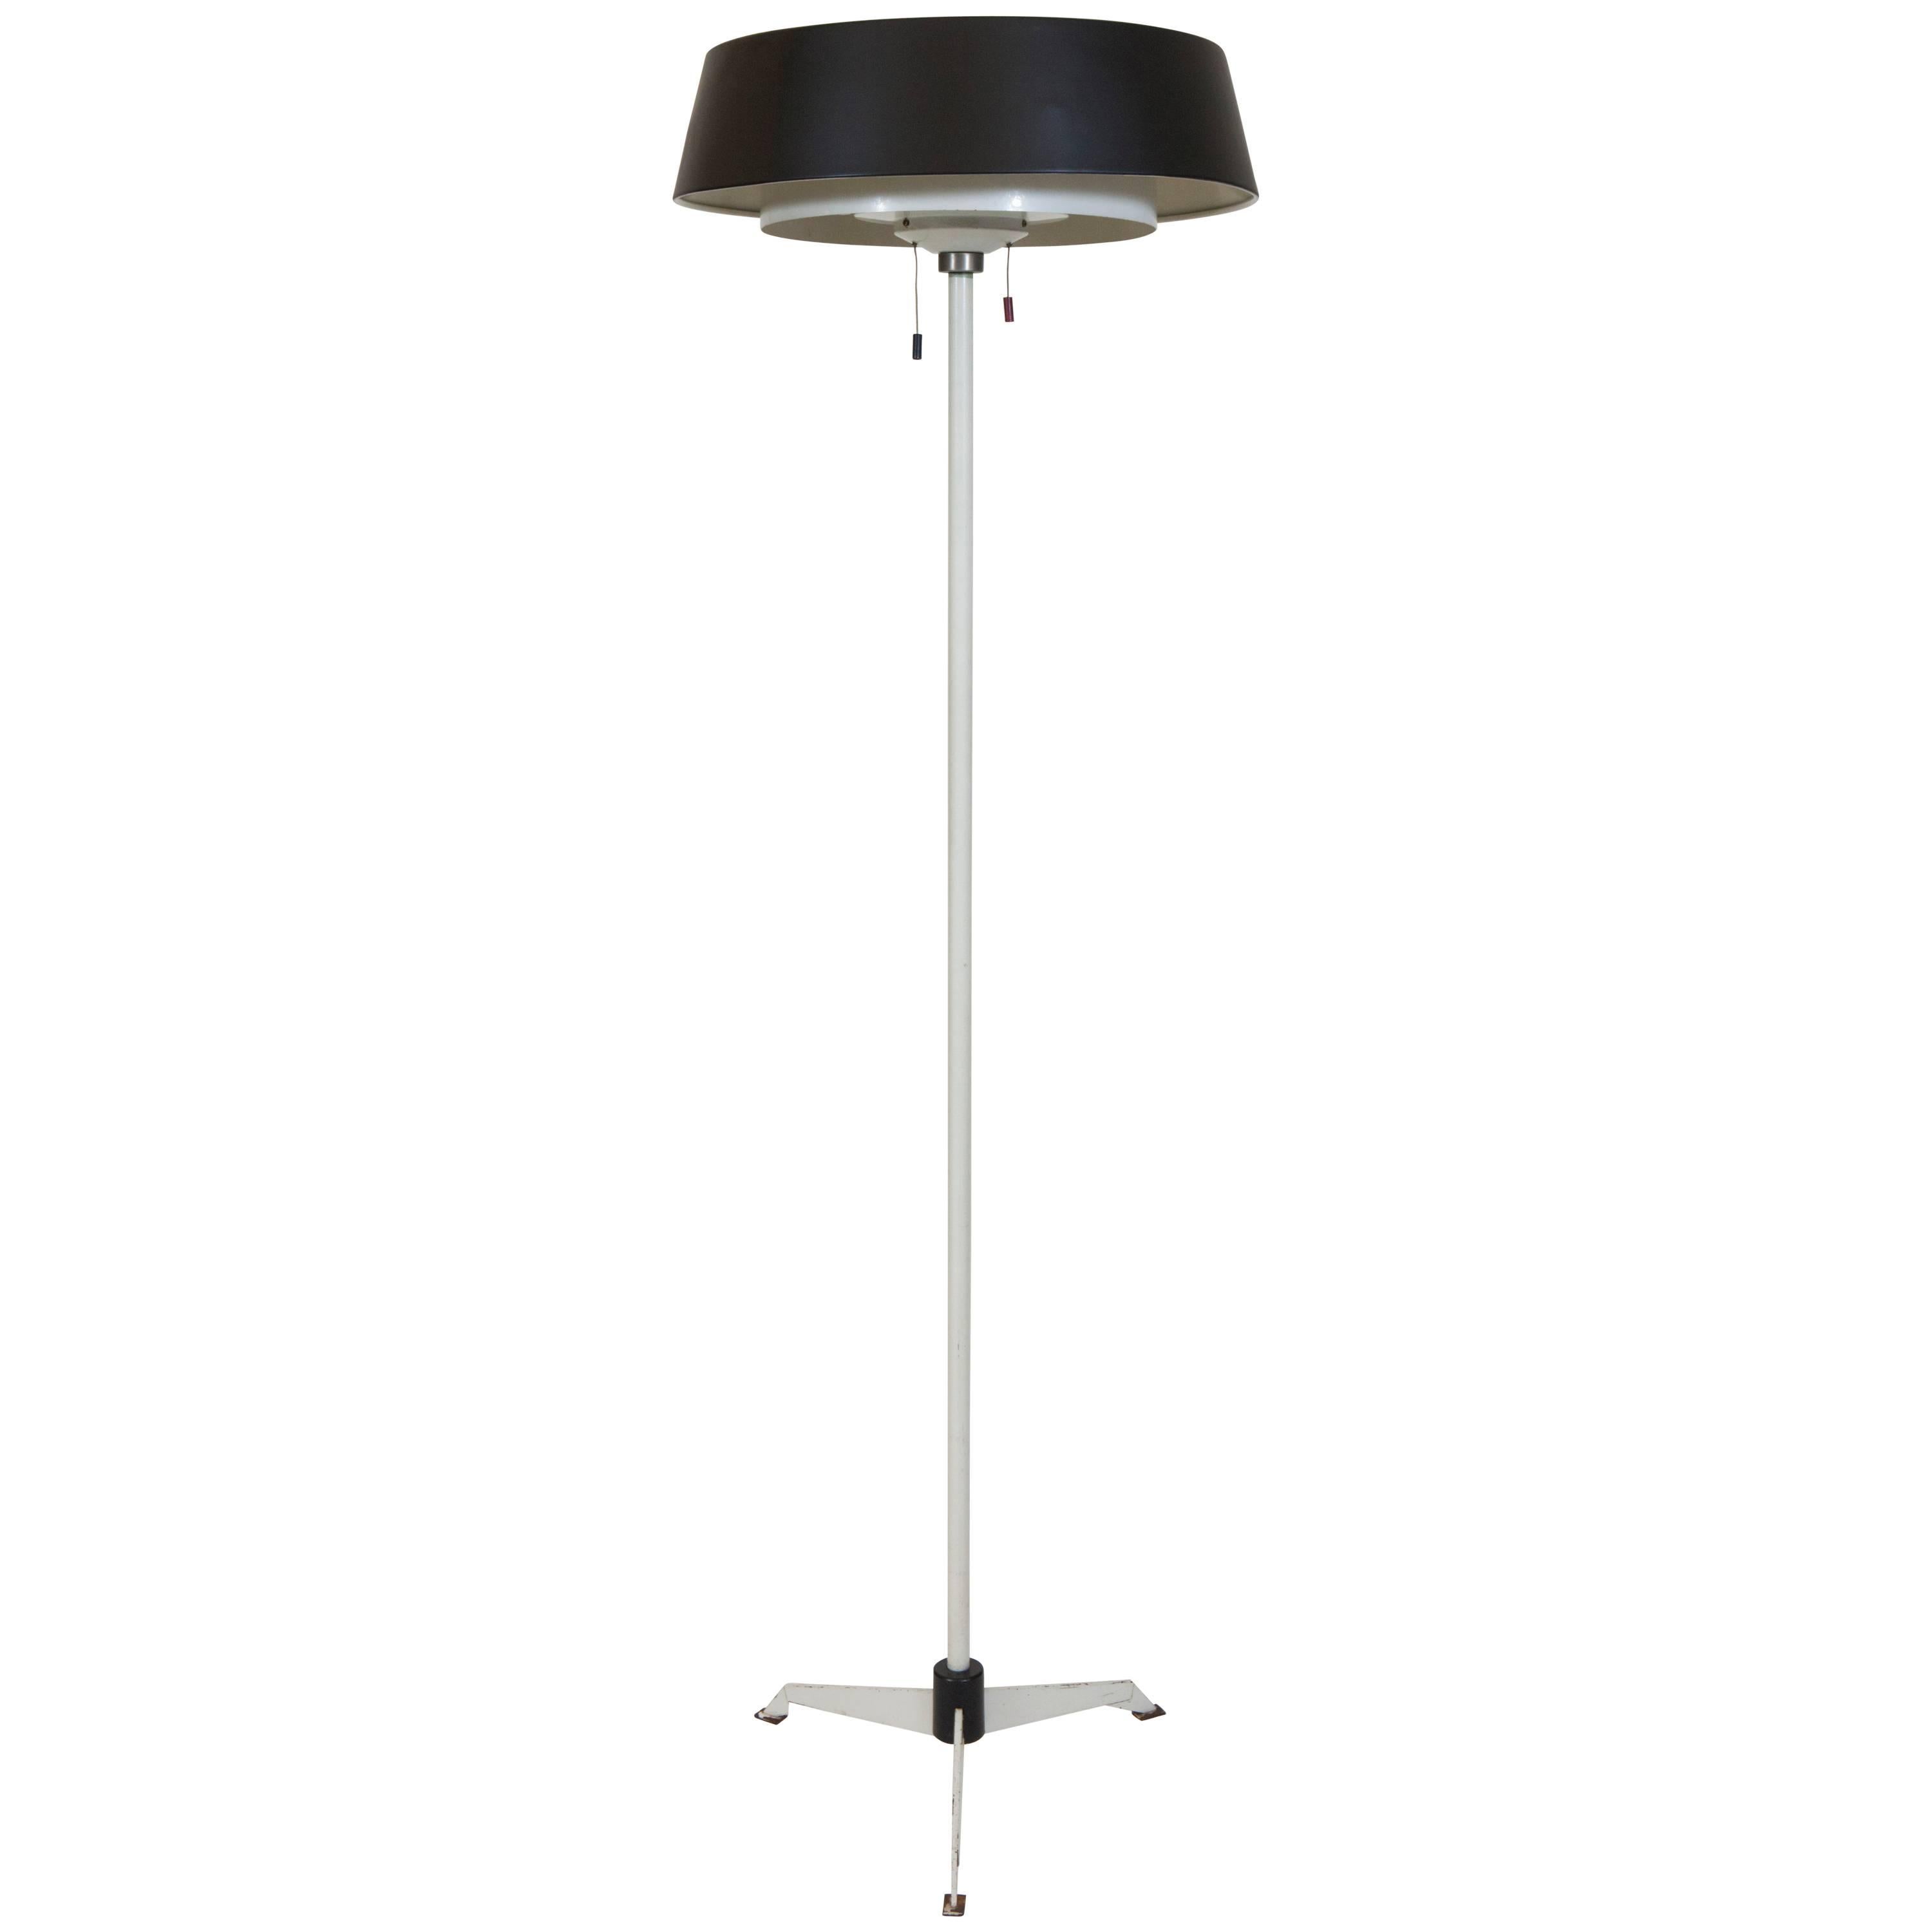 Evalux Floor Lamp For Sale